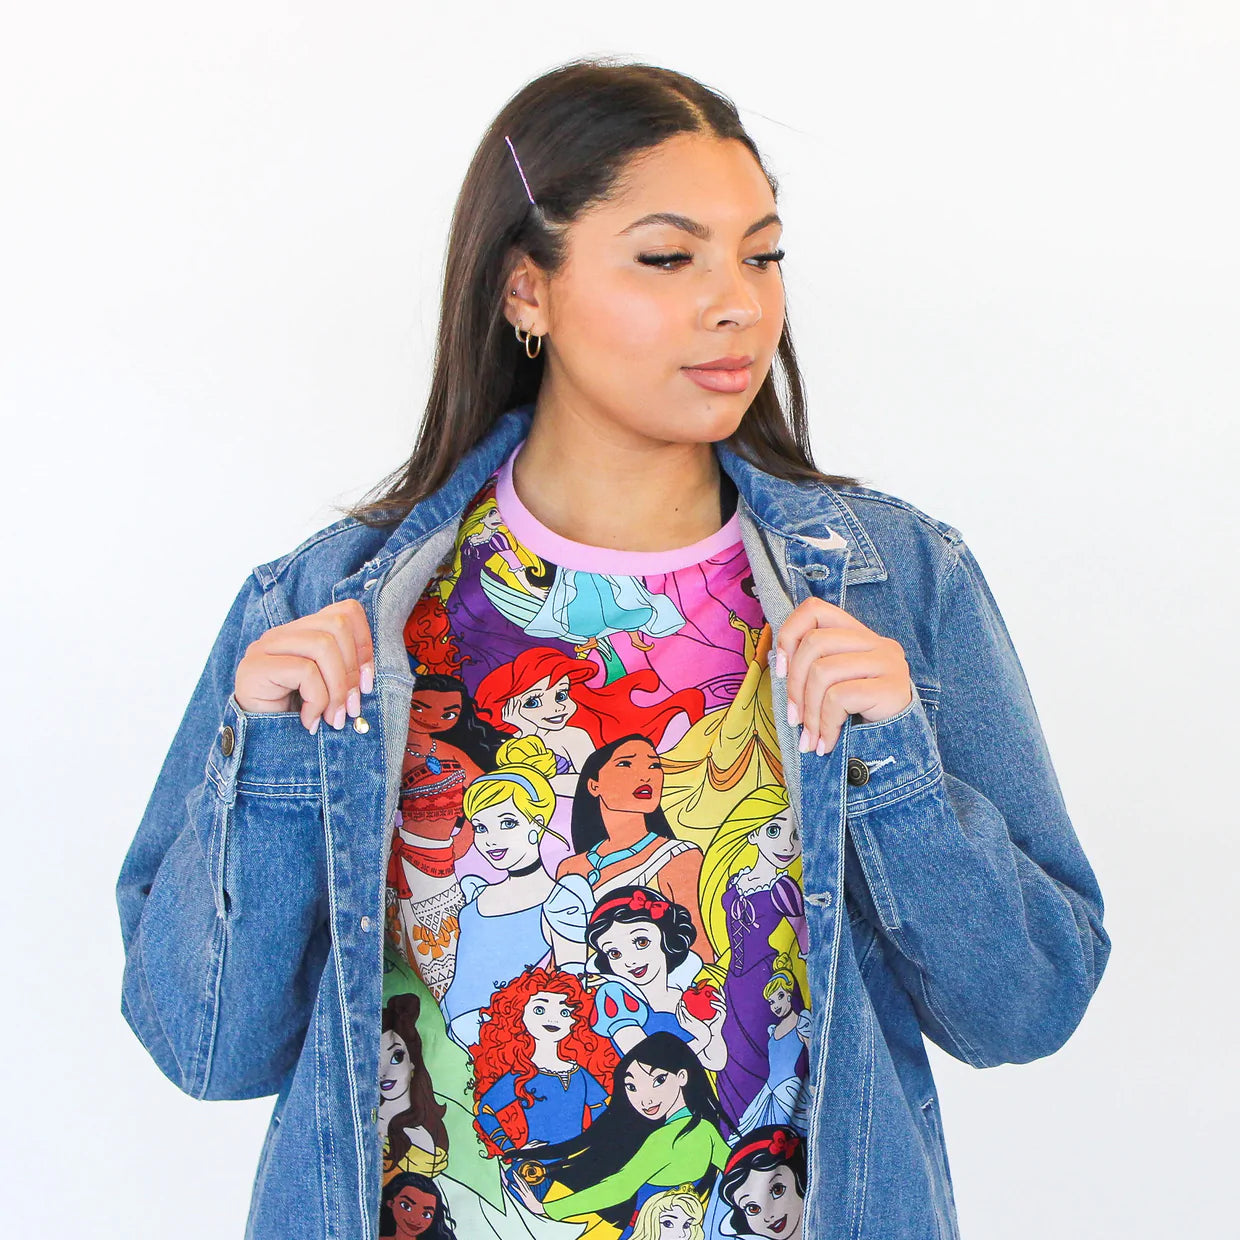 Princesses (Disney) AOP Unisex T-Shirt by Cakeworthy